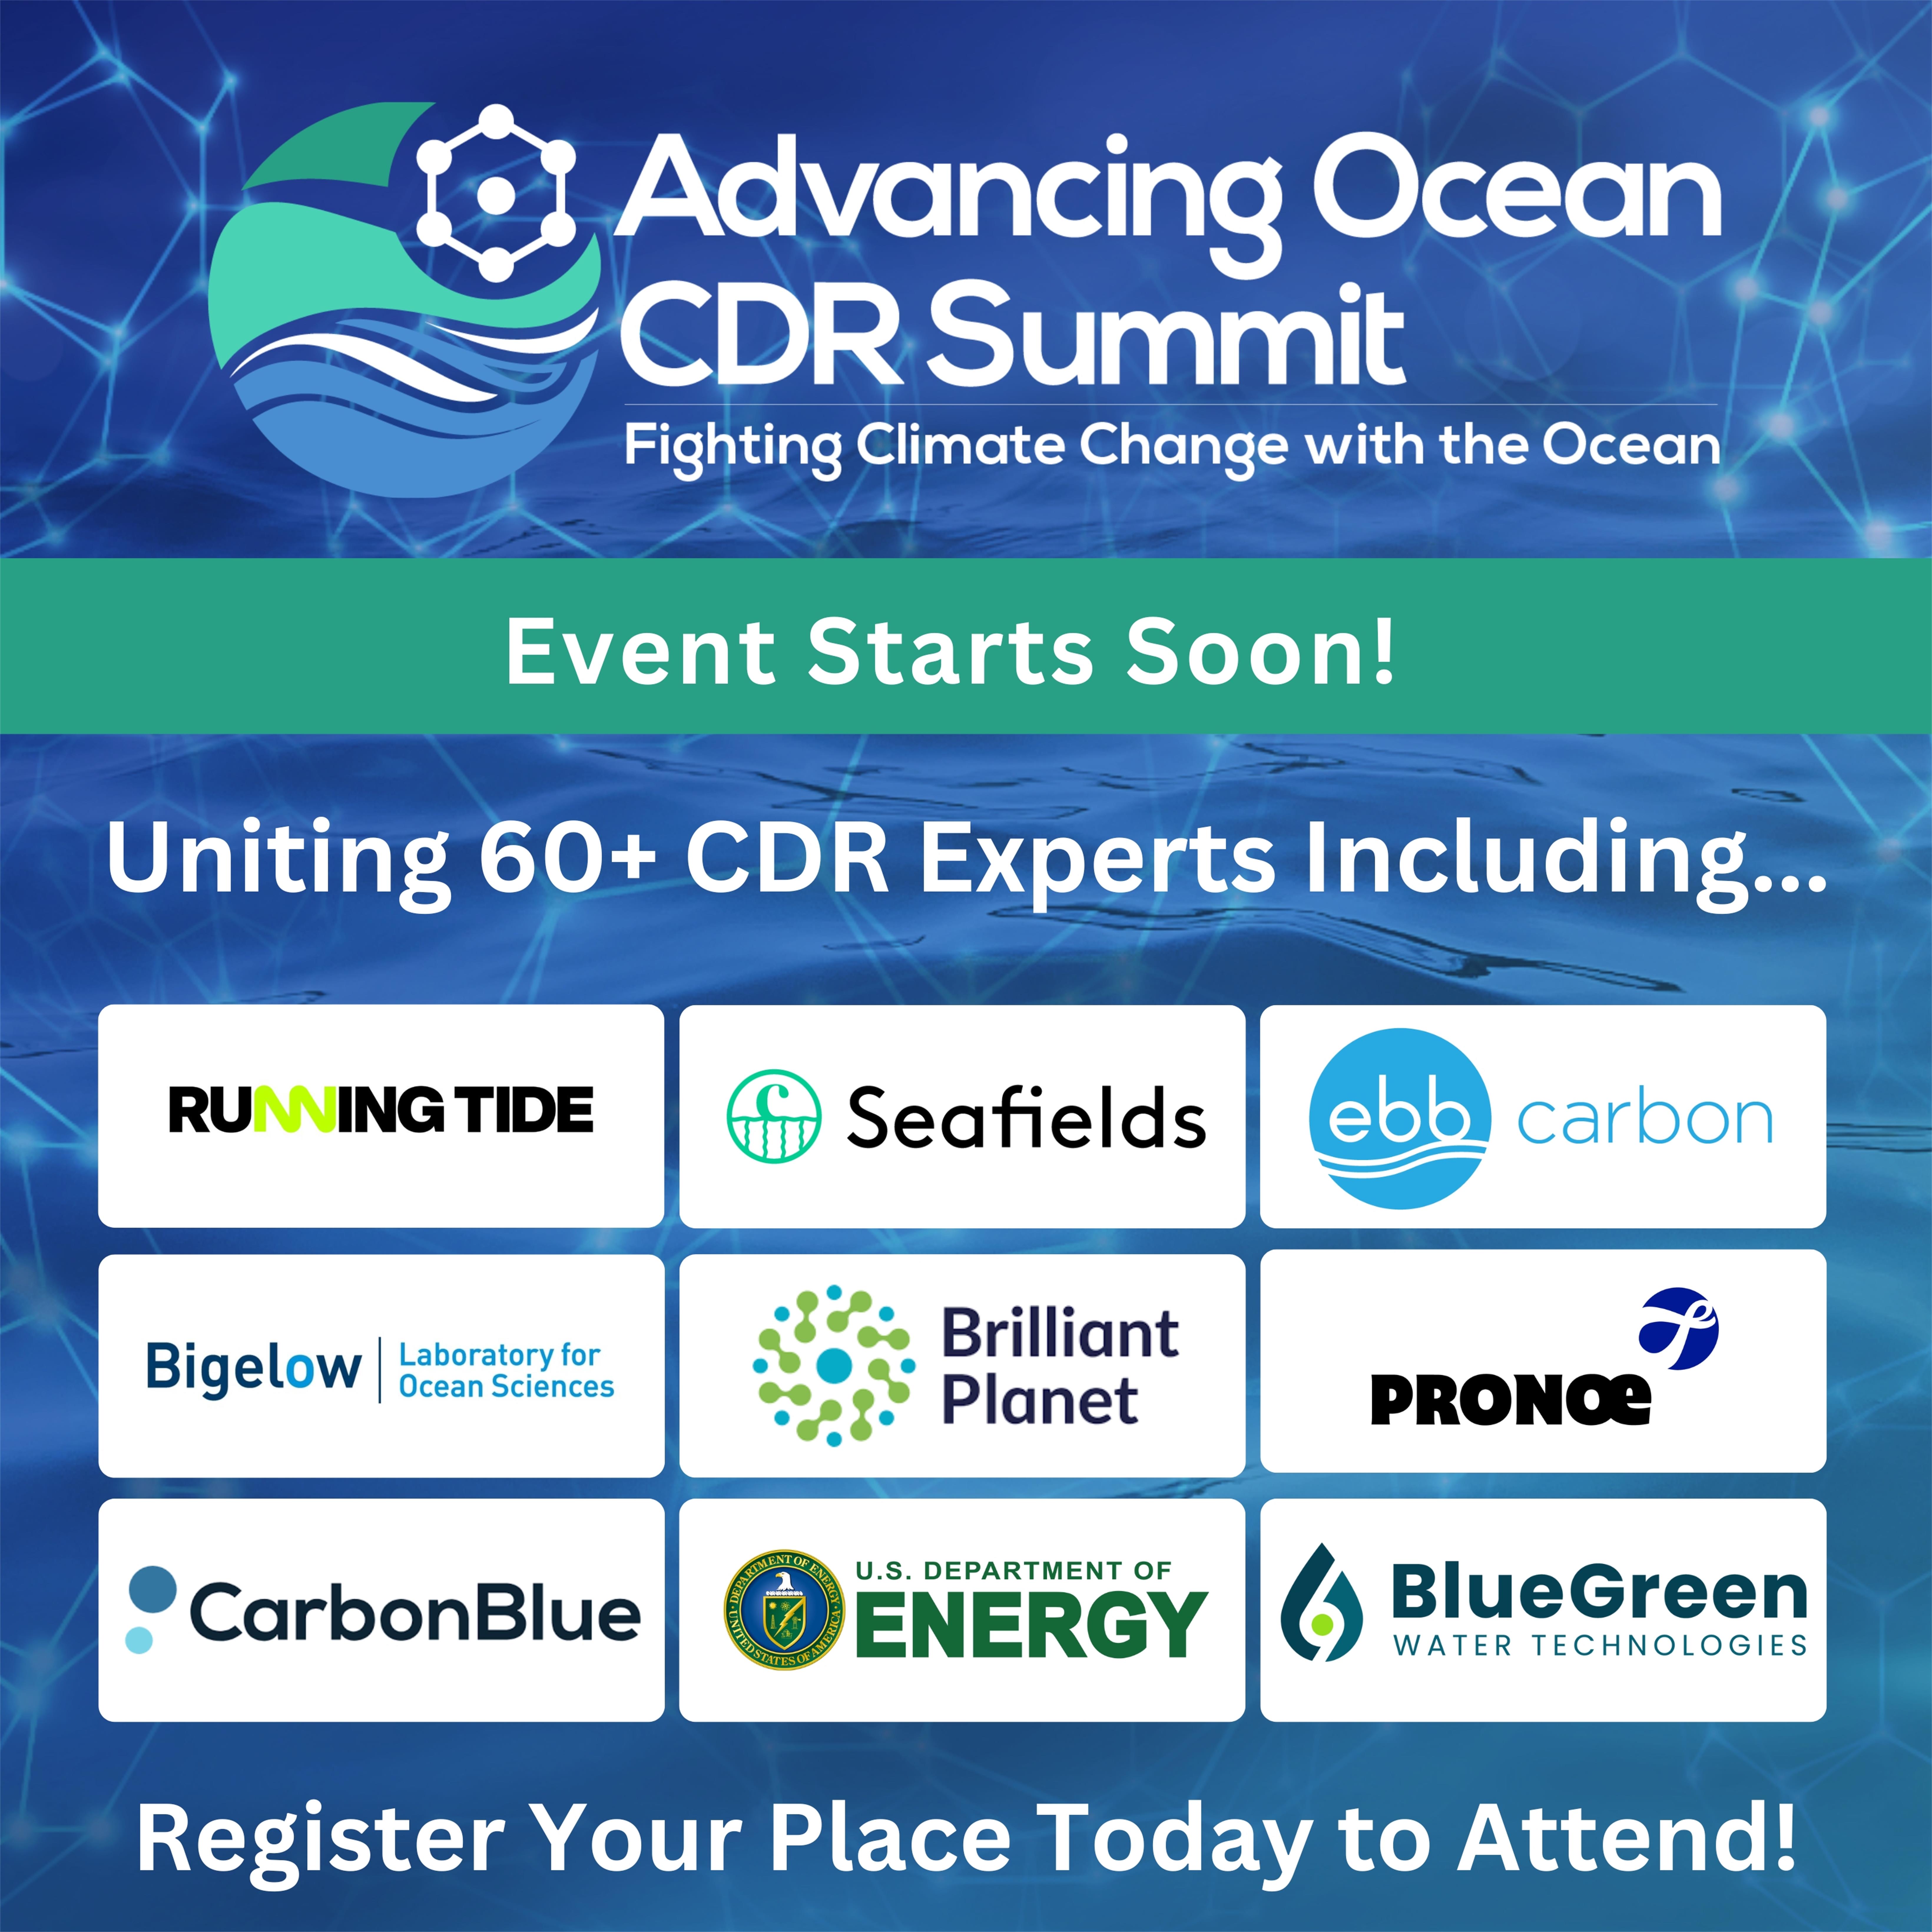 Advancing Ocean CDR Summit